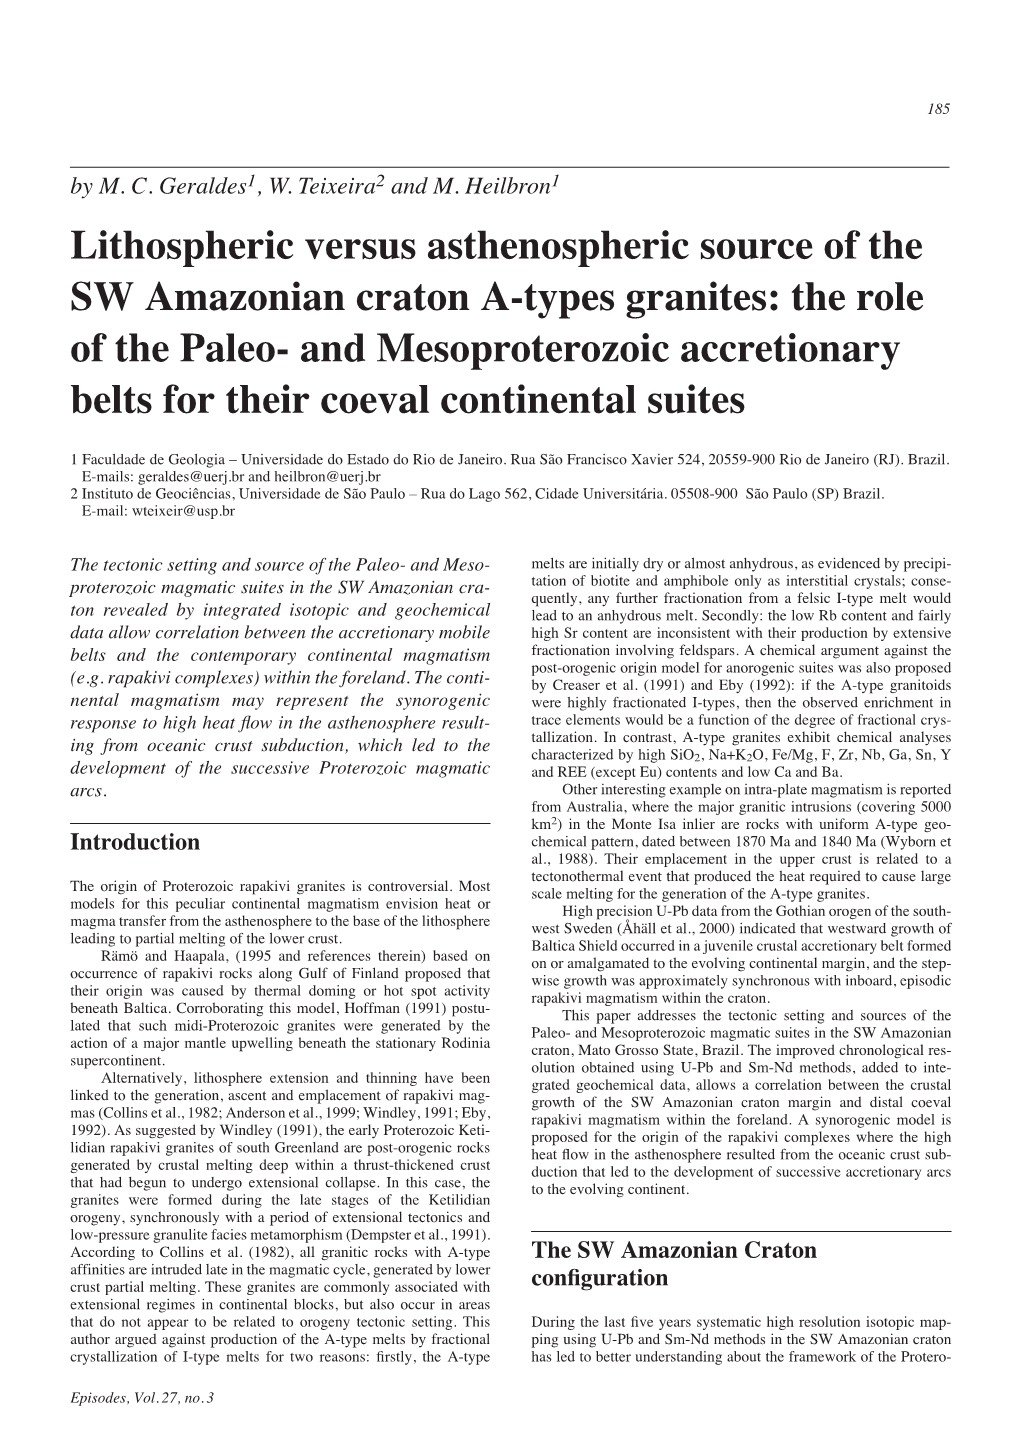 Lithospheric Versus Asthenospheric Source of the SW Amazonian Craton A-Types Granites